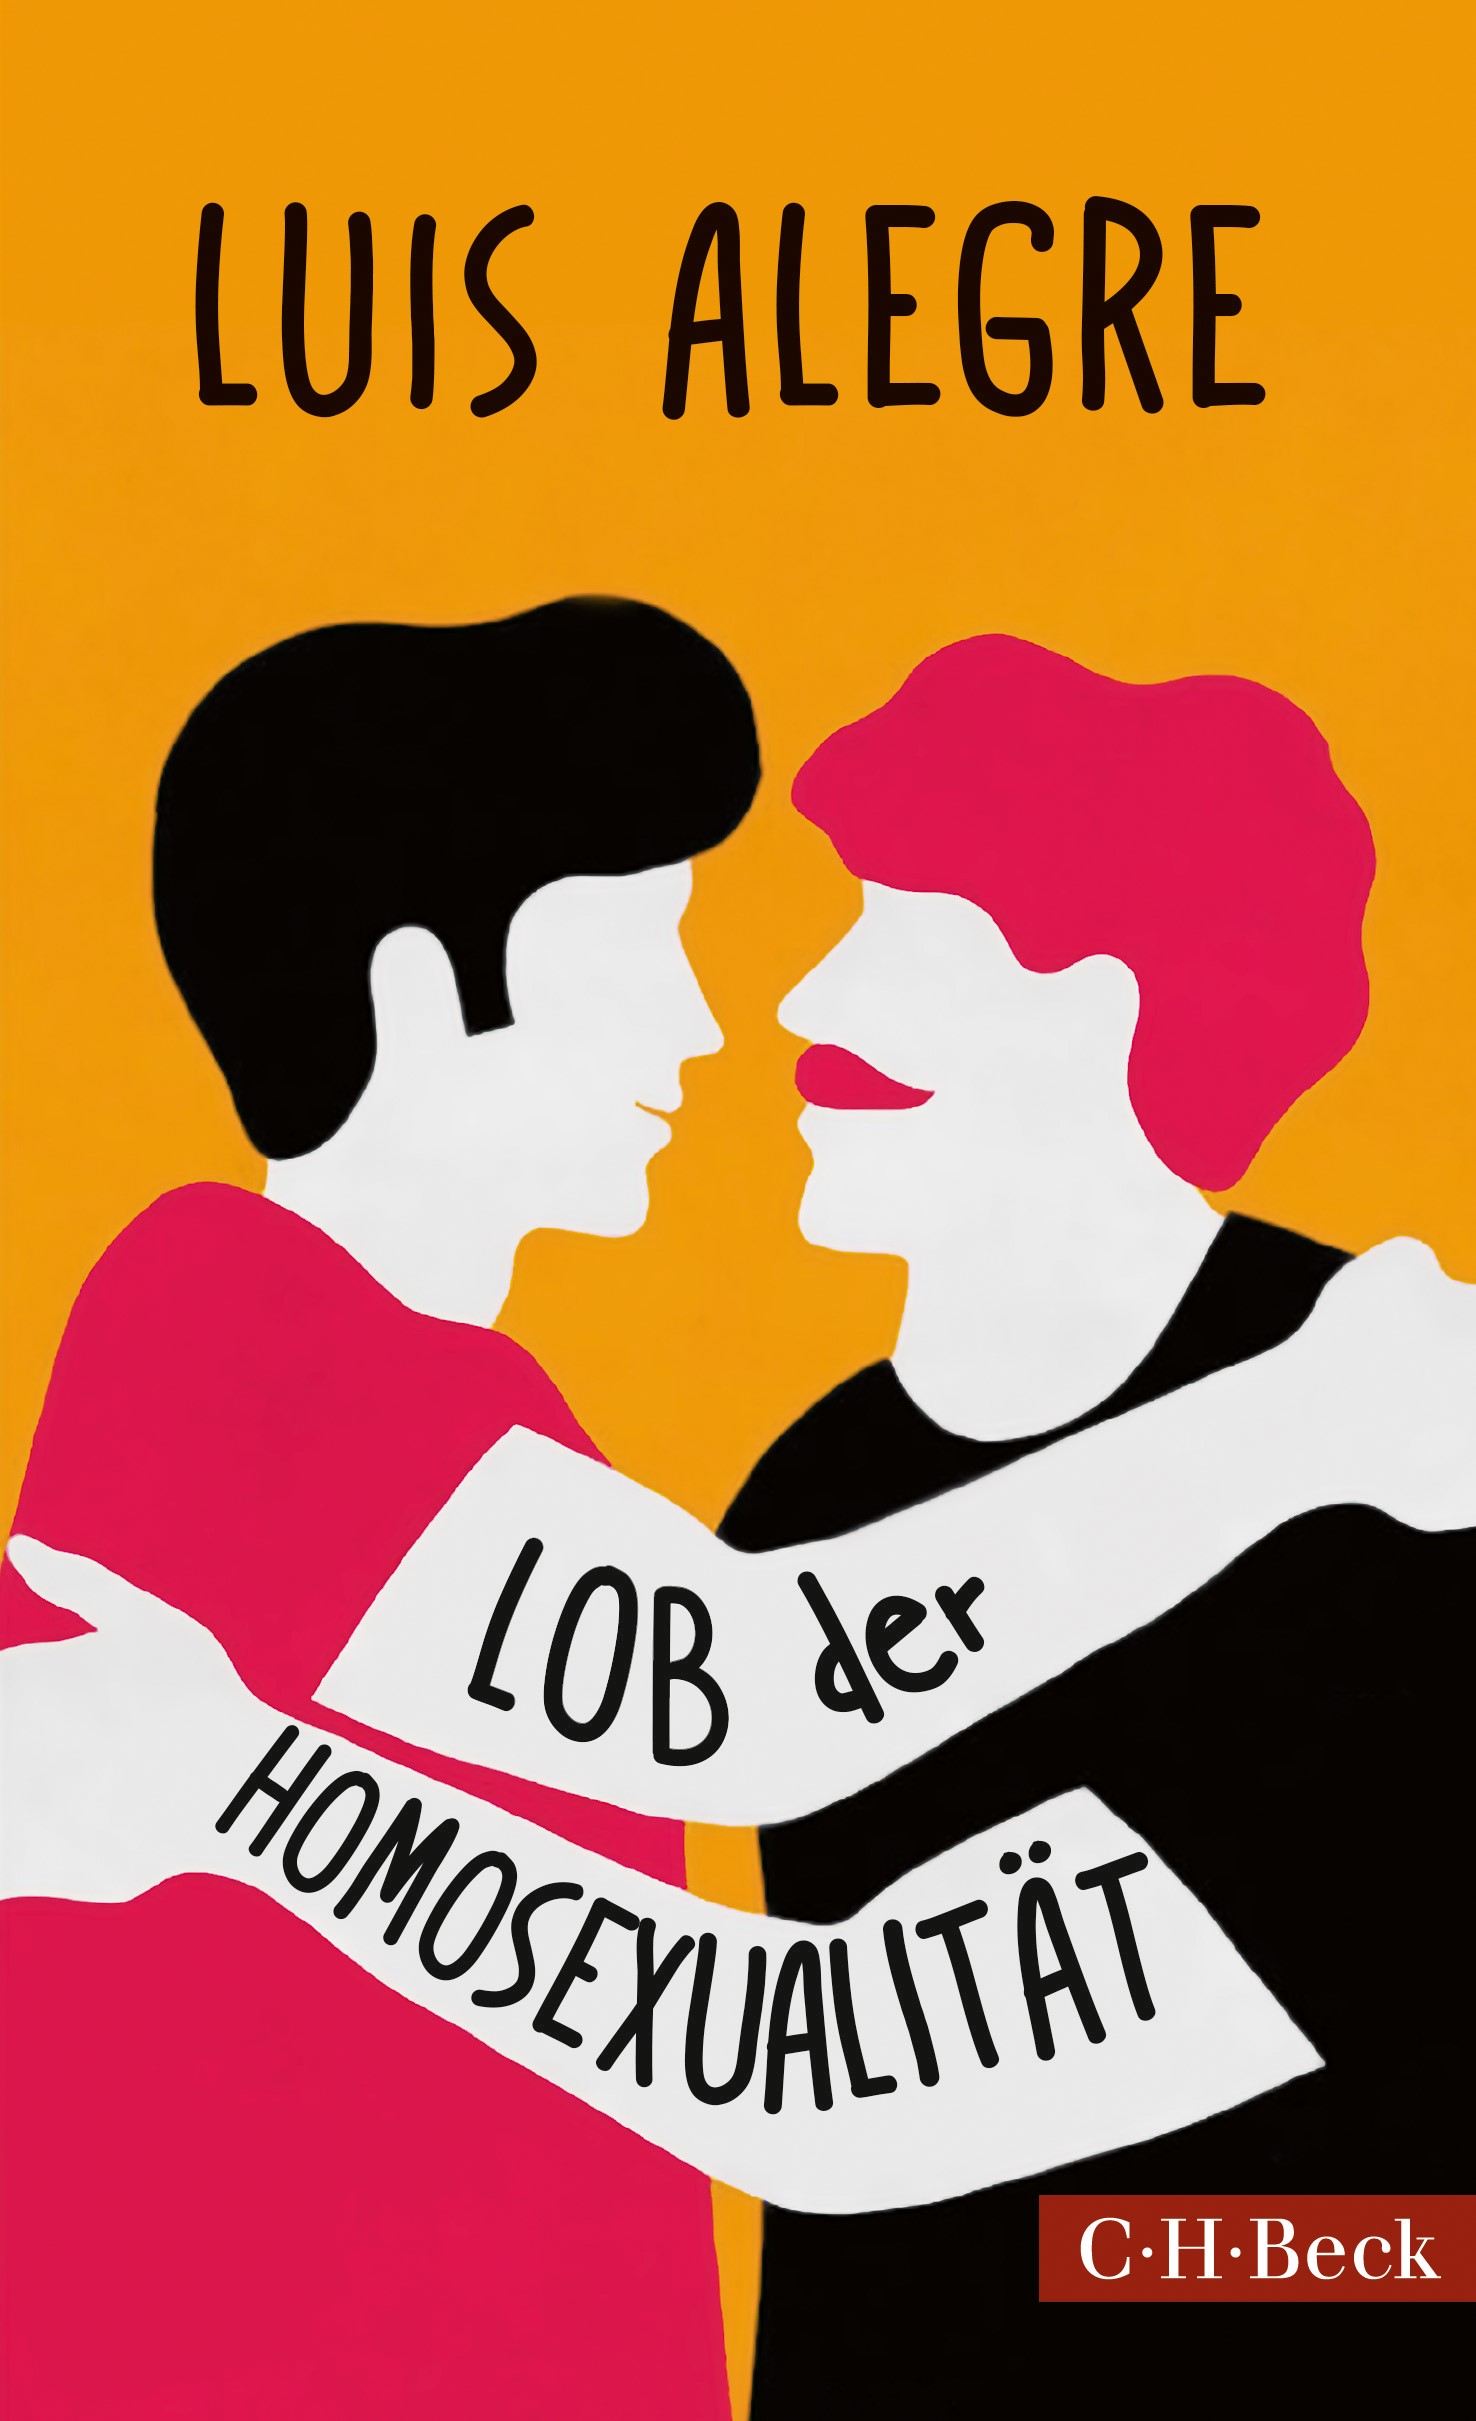 Cover: Alegre, Luis, Lob der Homosexualität